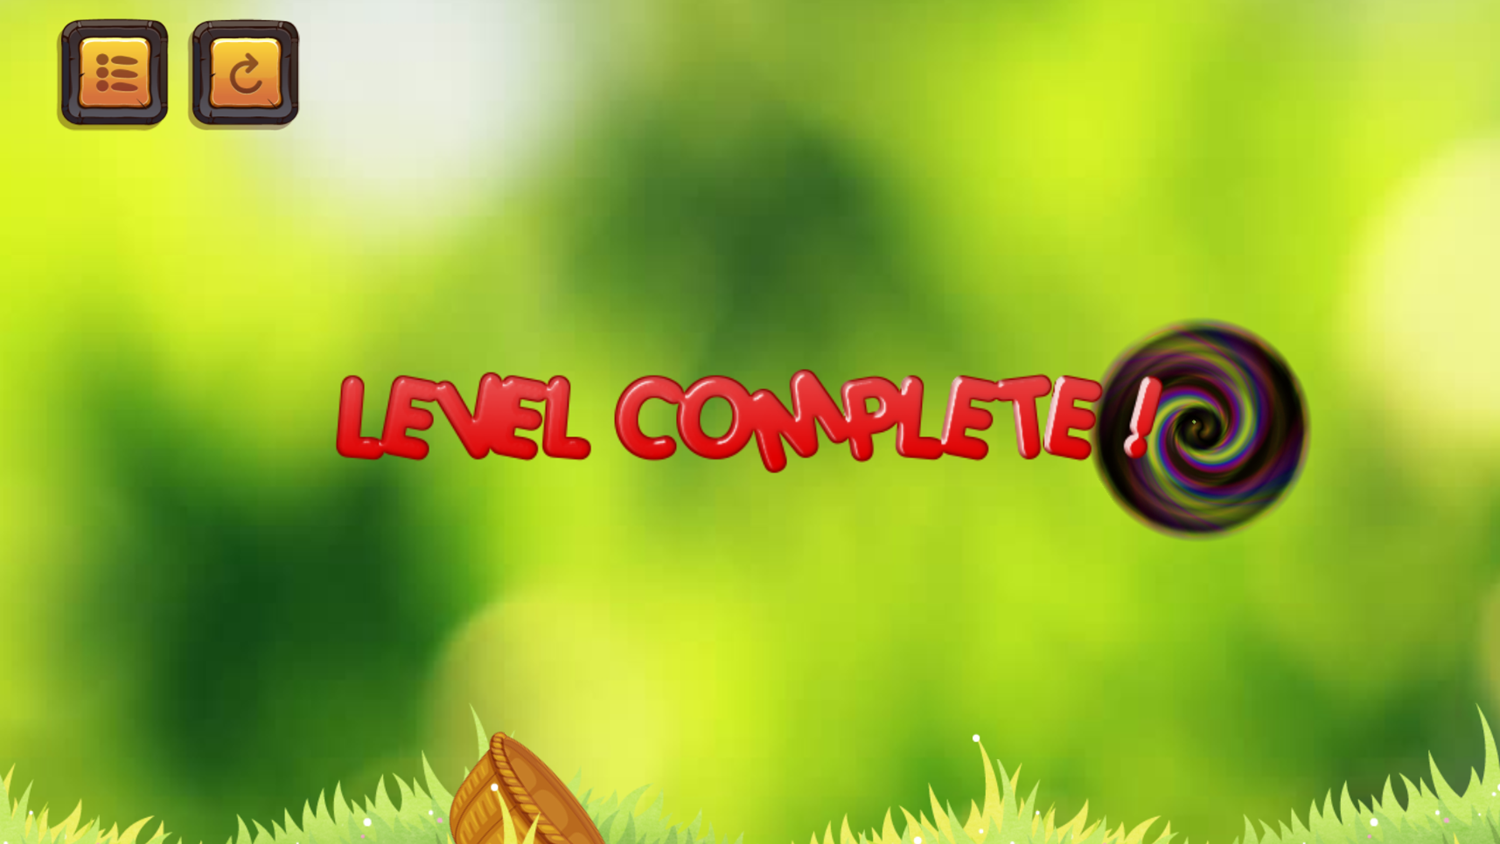 Mortar Watermelon Game Level Complete Screenshot.